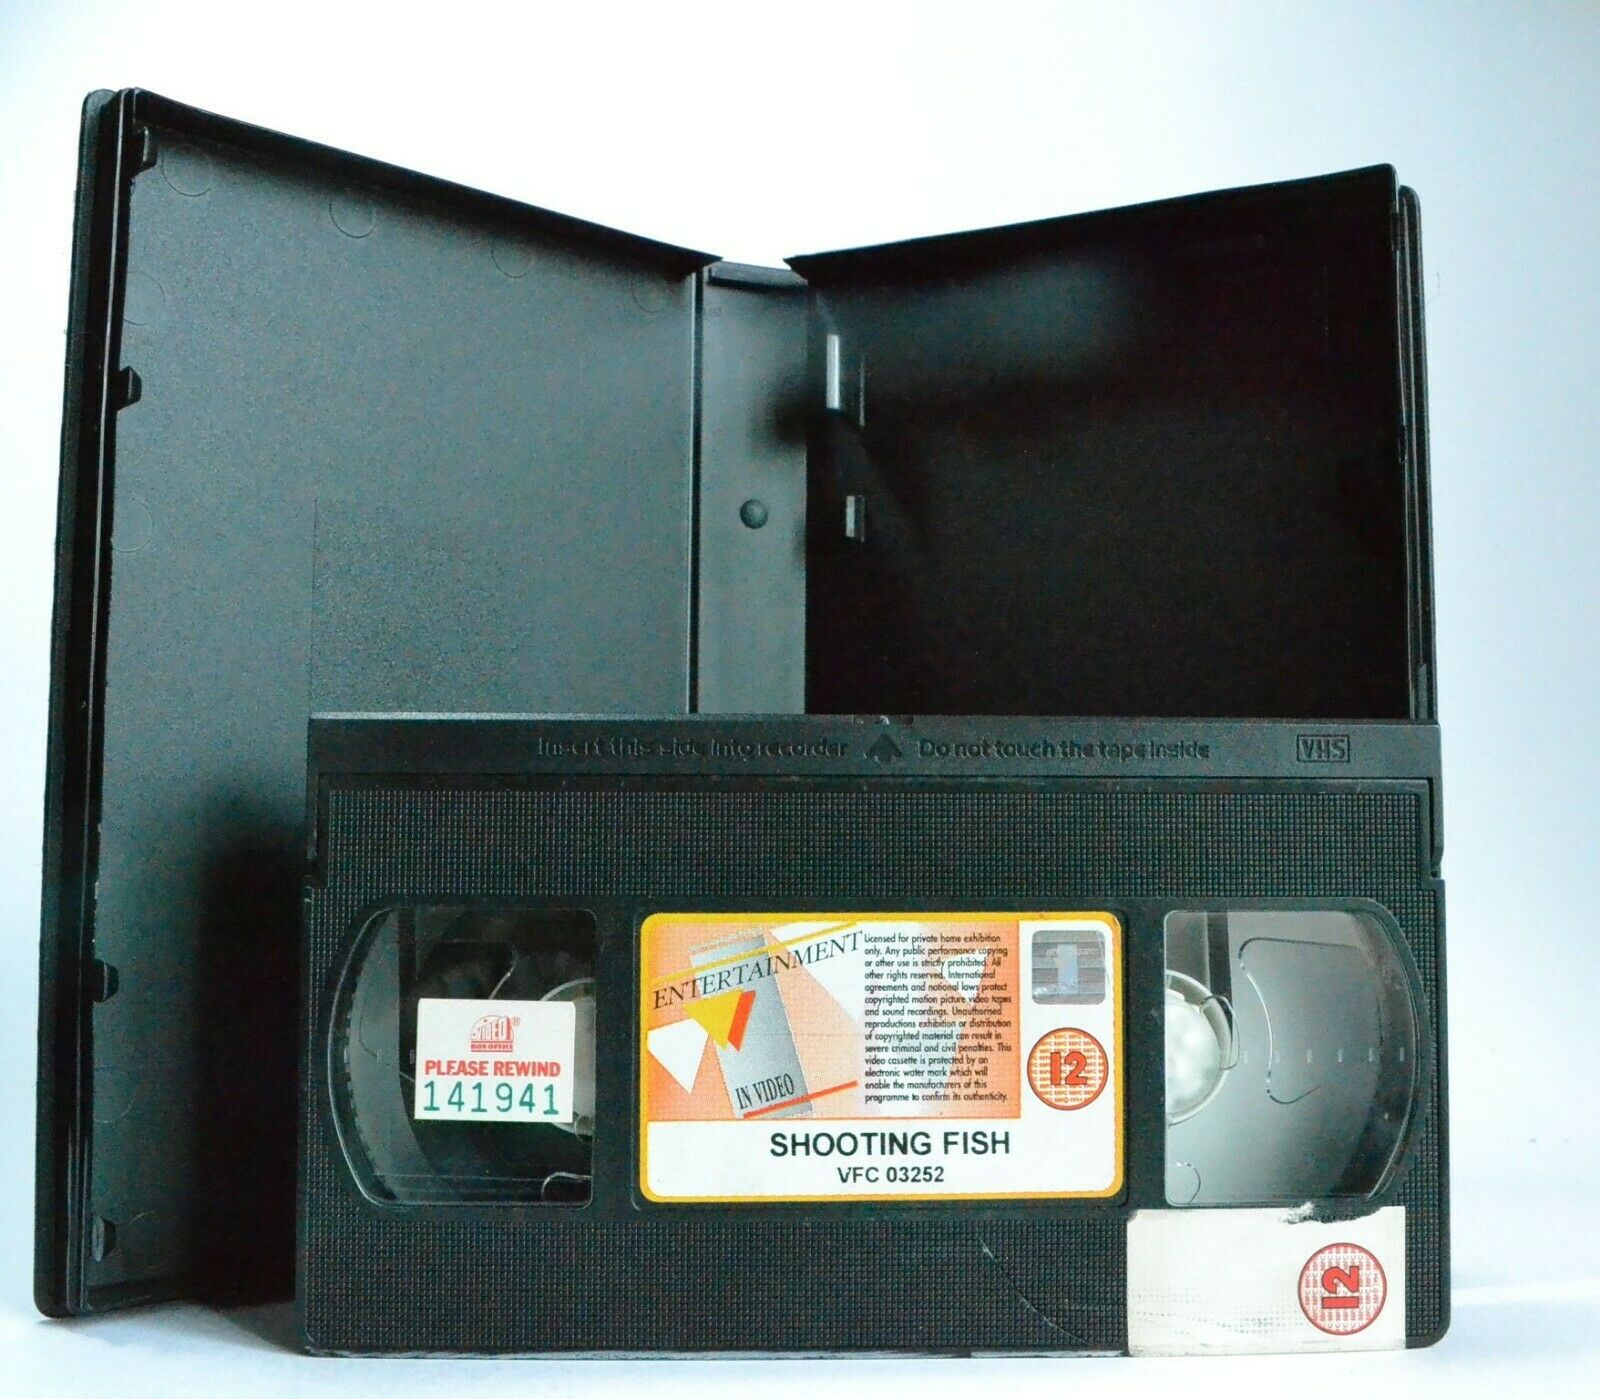 Shooting Fish: British Romantic Comedy - Large Box - Kate Beckinsale - Pal VHS-